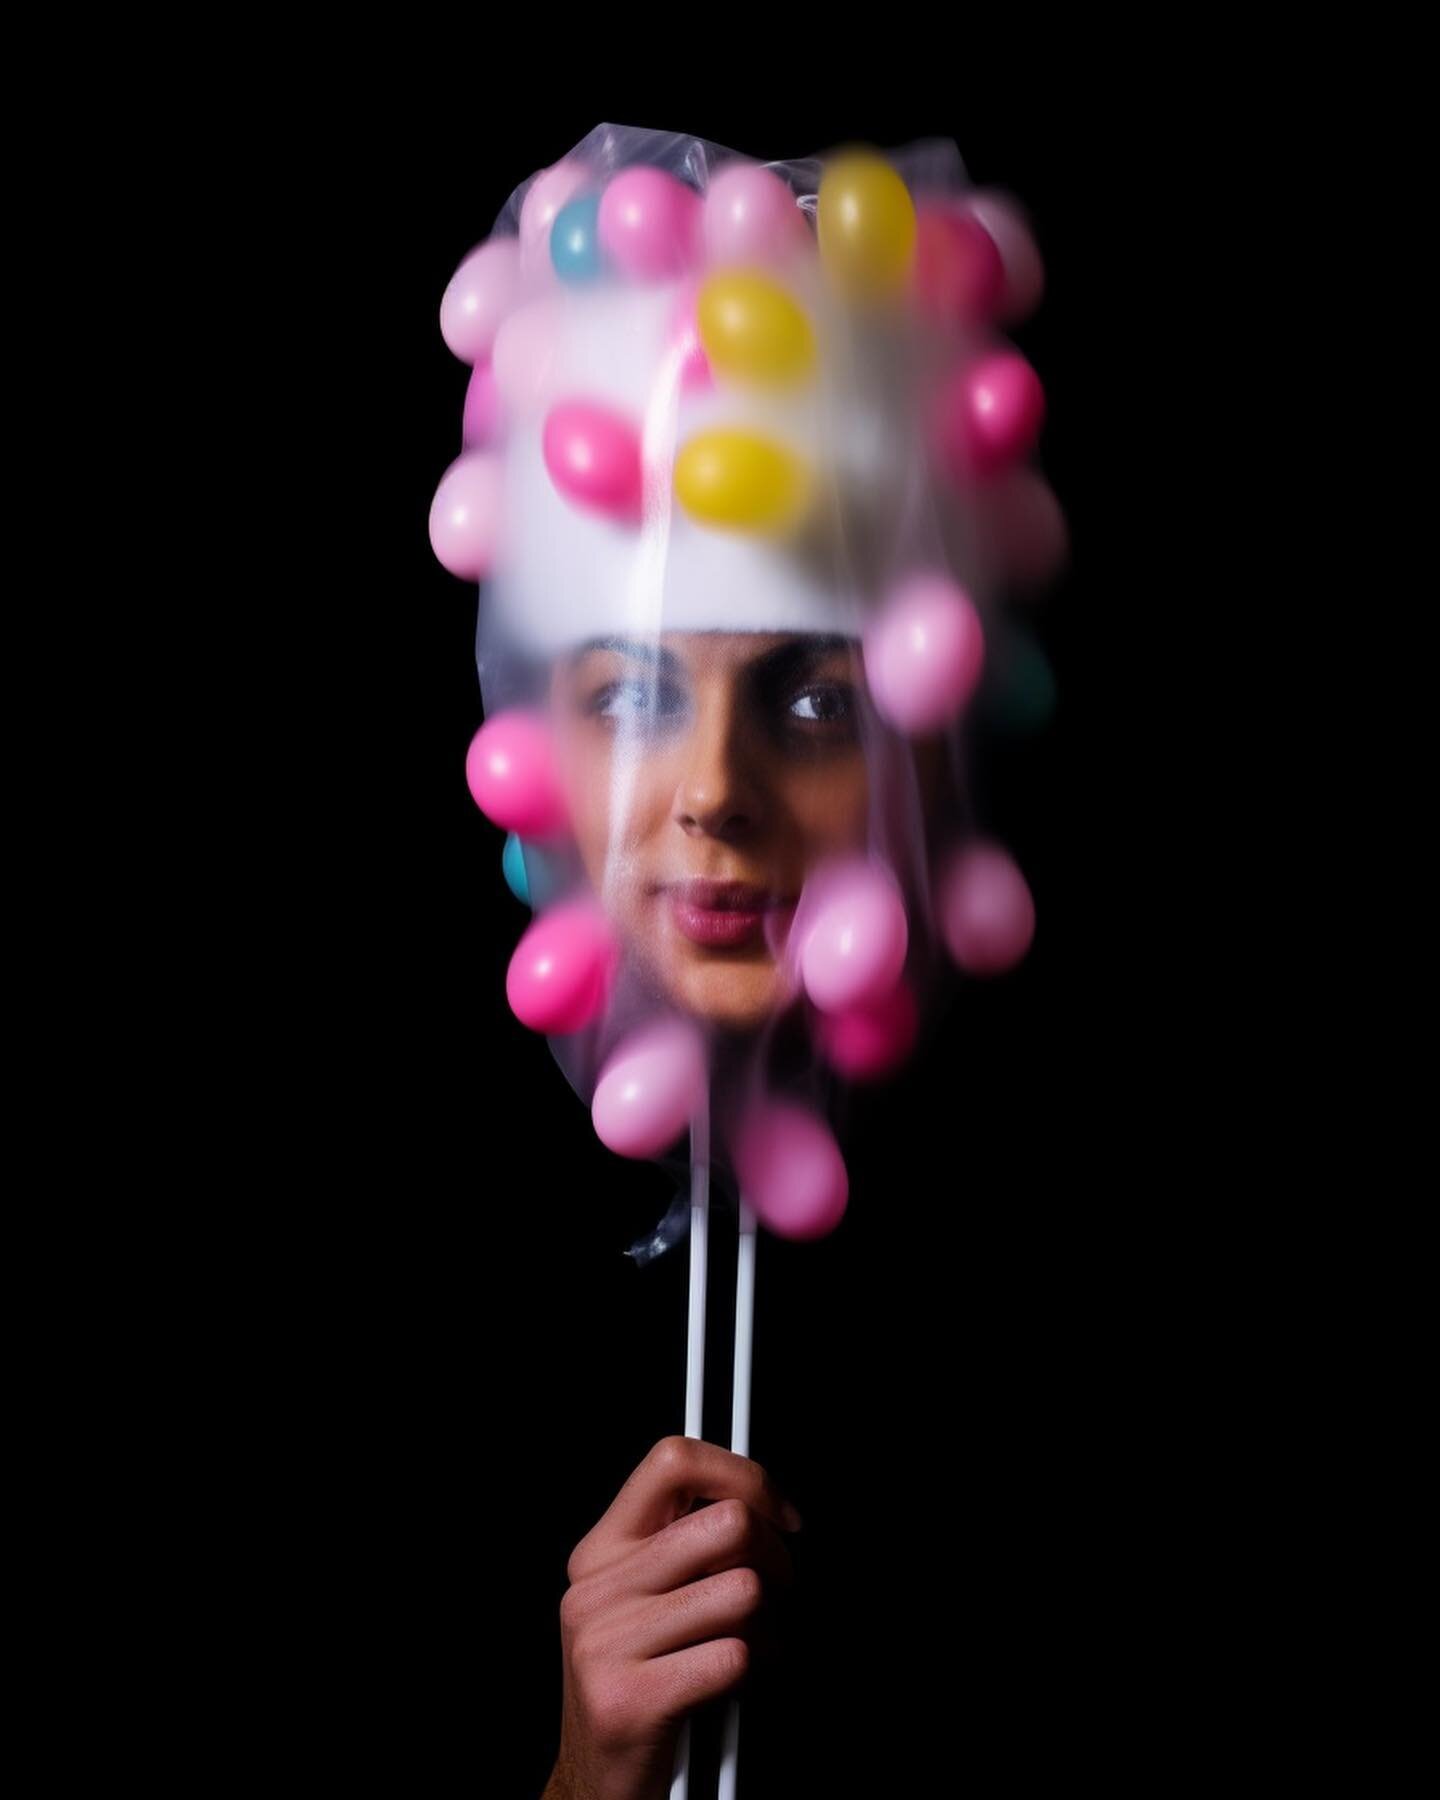 Bubble Wrap &amp; Cotton Swabs #ai #midjourney #aiart #synthography #midjourneyart #art #digitalart #synthography #midjourneycrew #midjourneyv5 #generativeart #pink #girl #women #bubble #bubbles #bubblewrap #portrait #weirdart